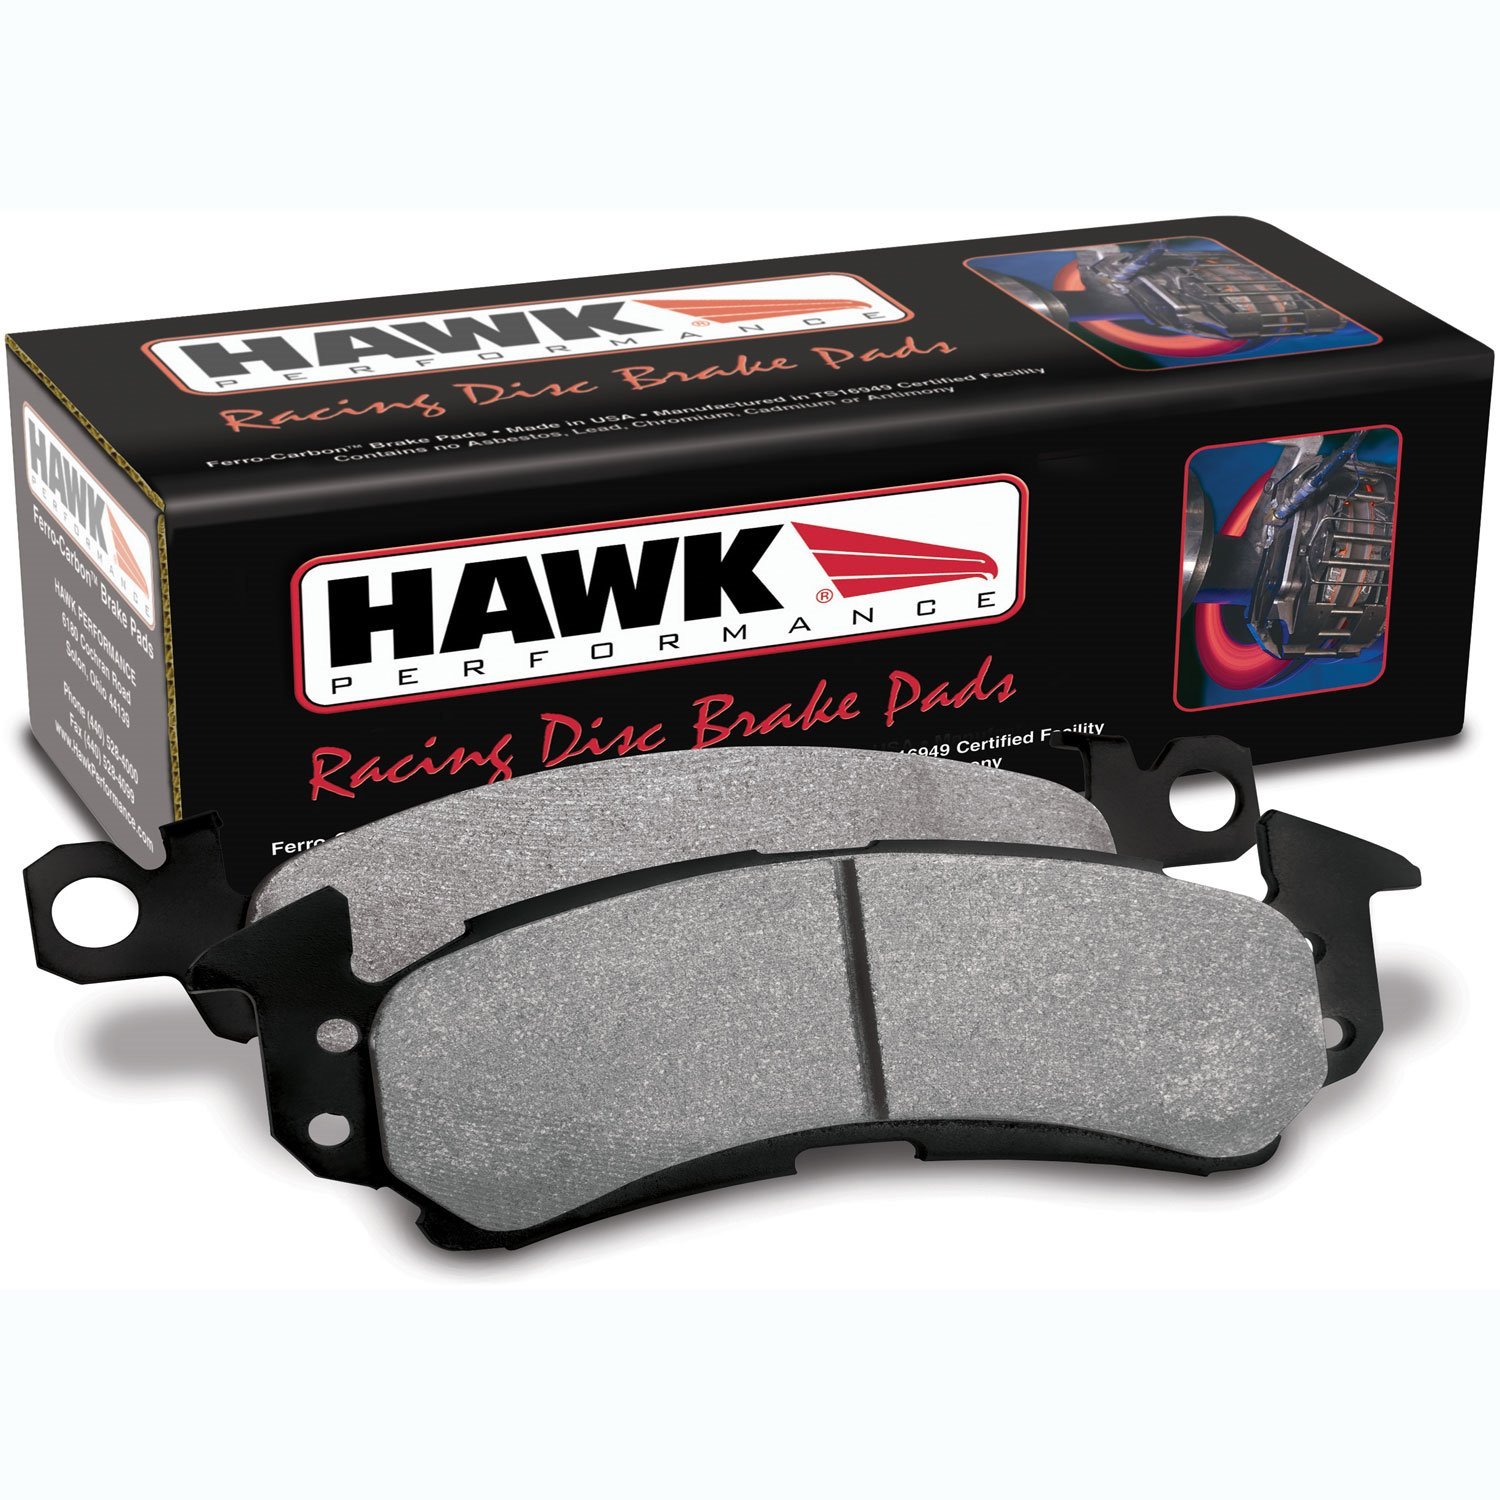 Disc Brake Pad HP Plus w/0.605 Thickness